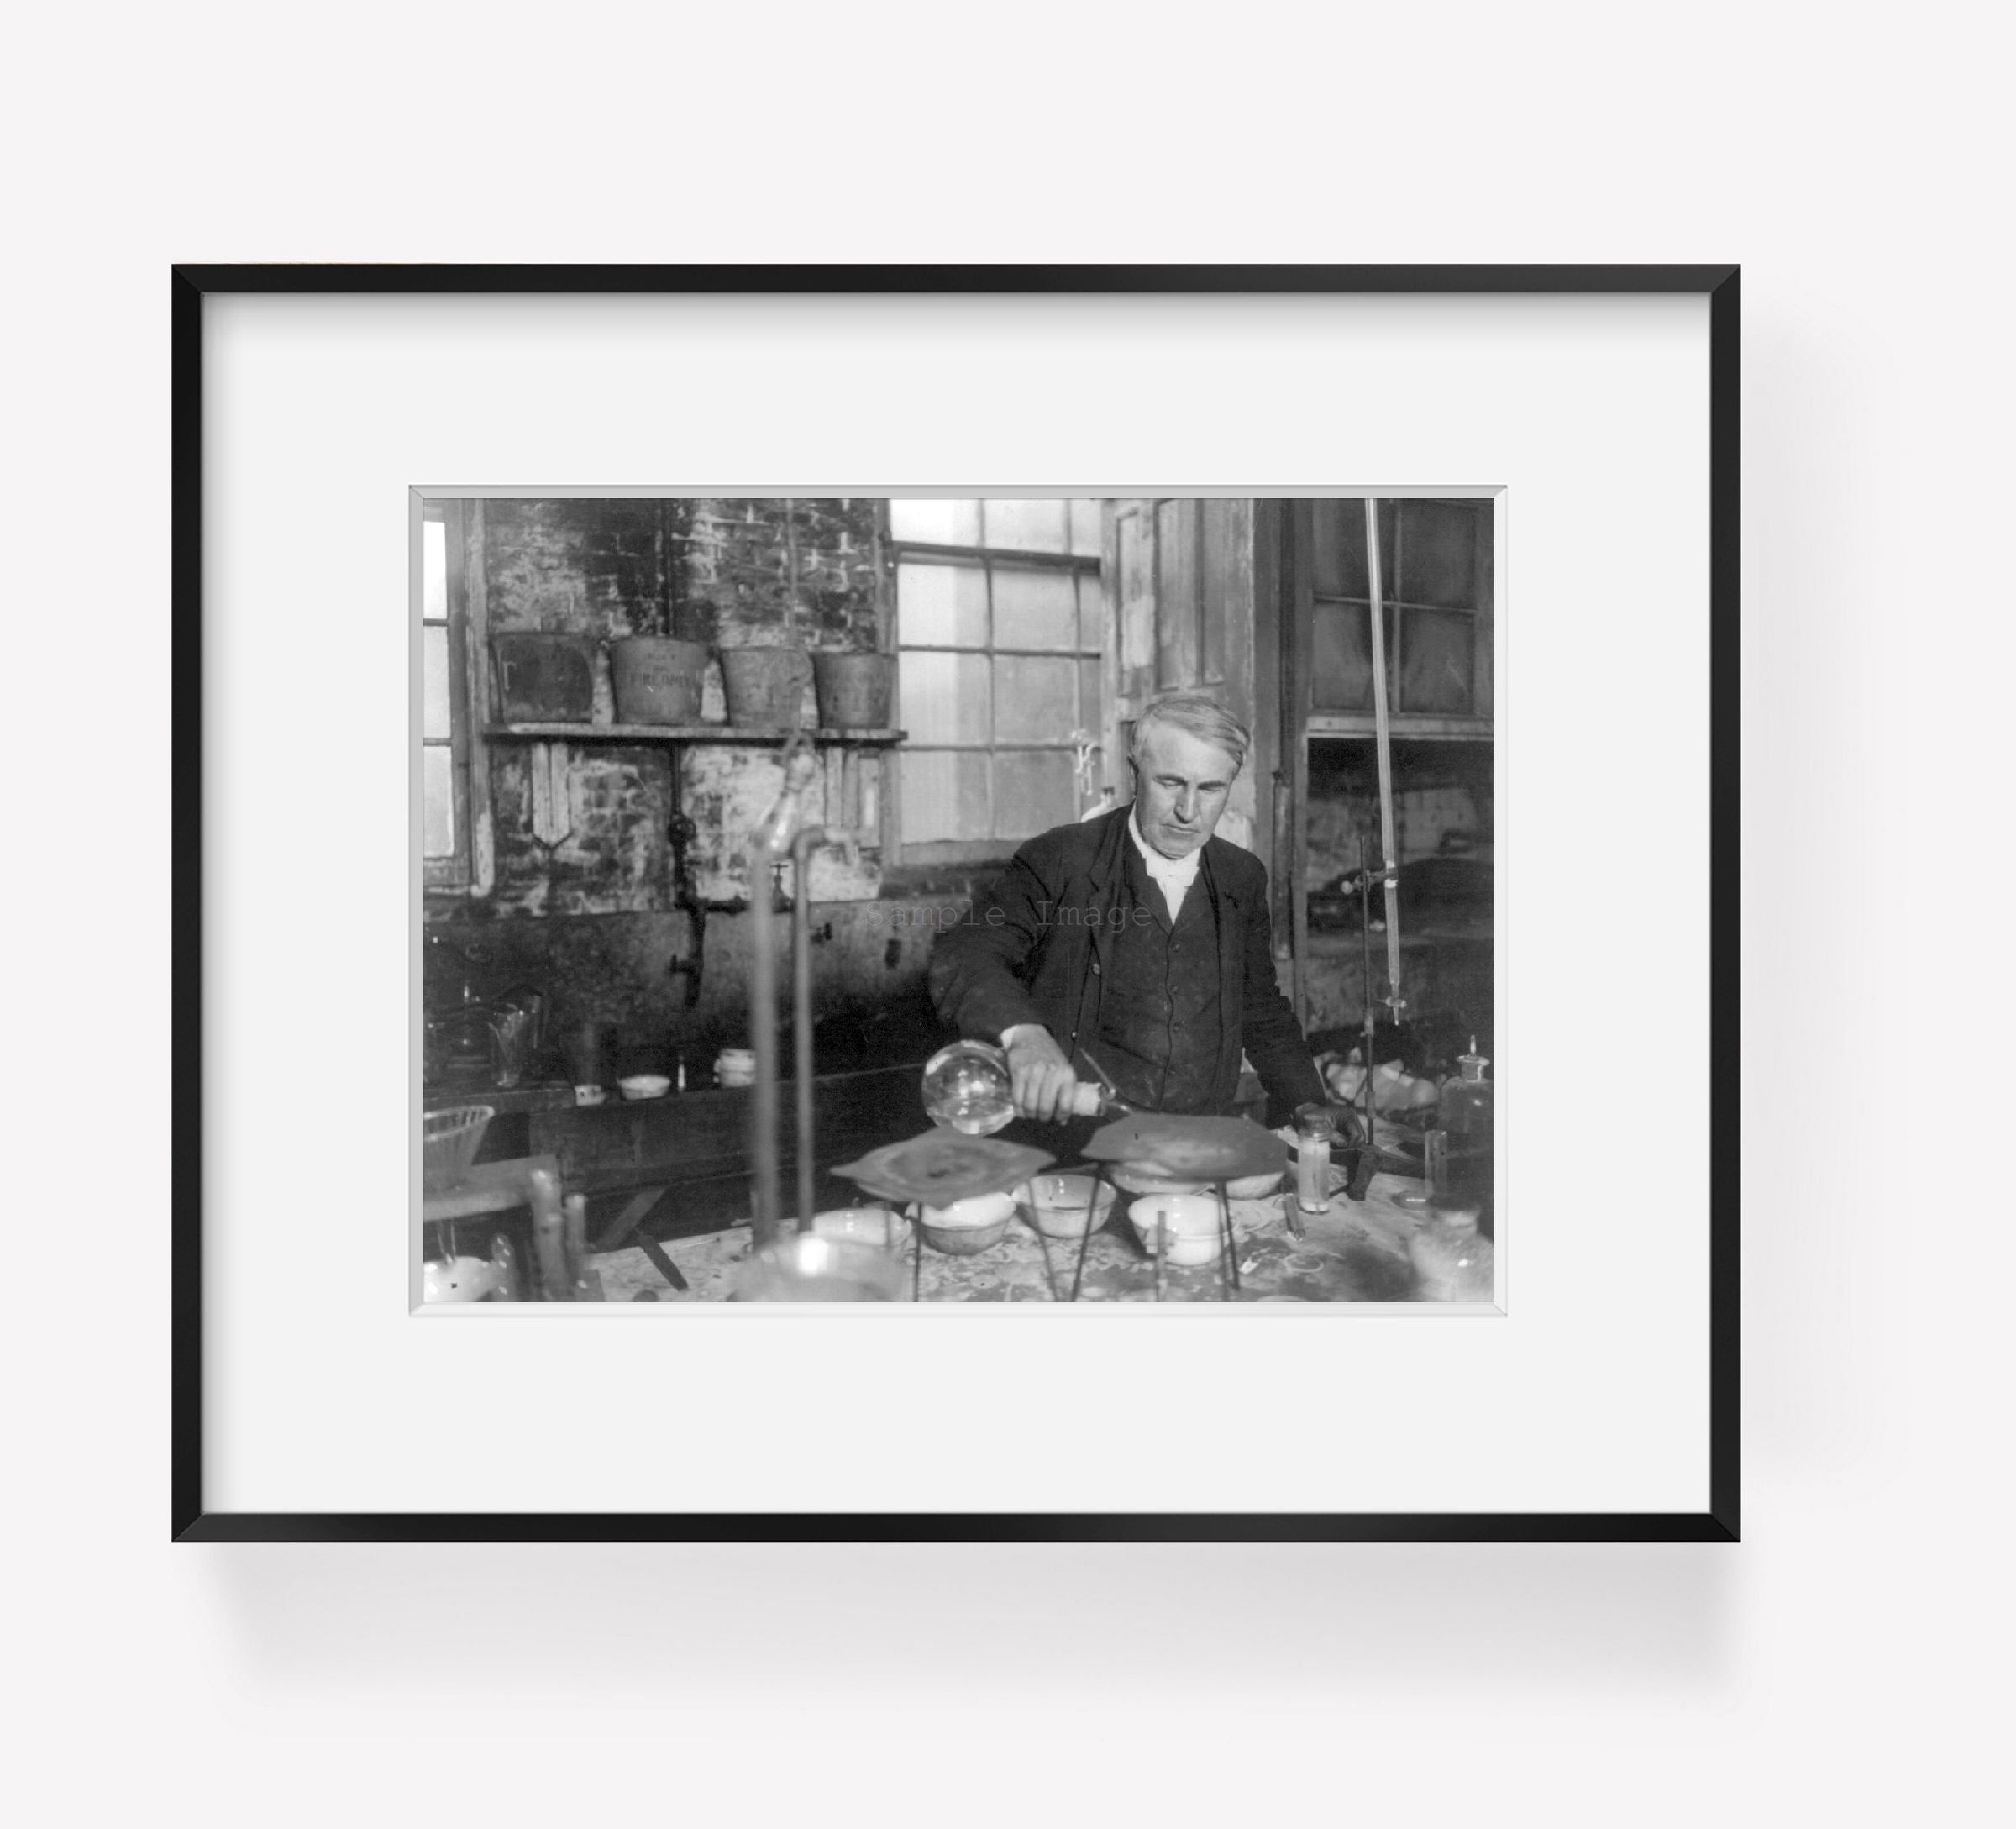 c1905 photograph of Thomas Alva Edison, 1847-1931, half-length portrait, working